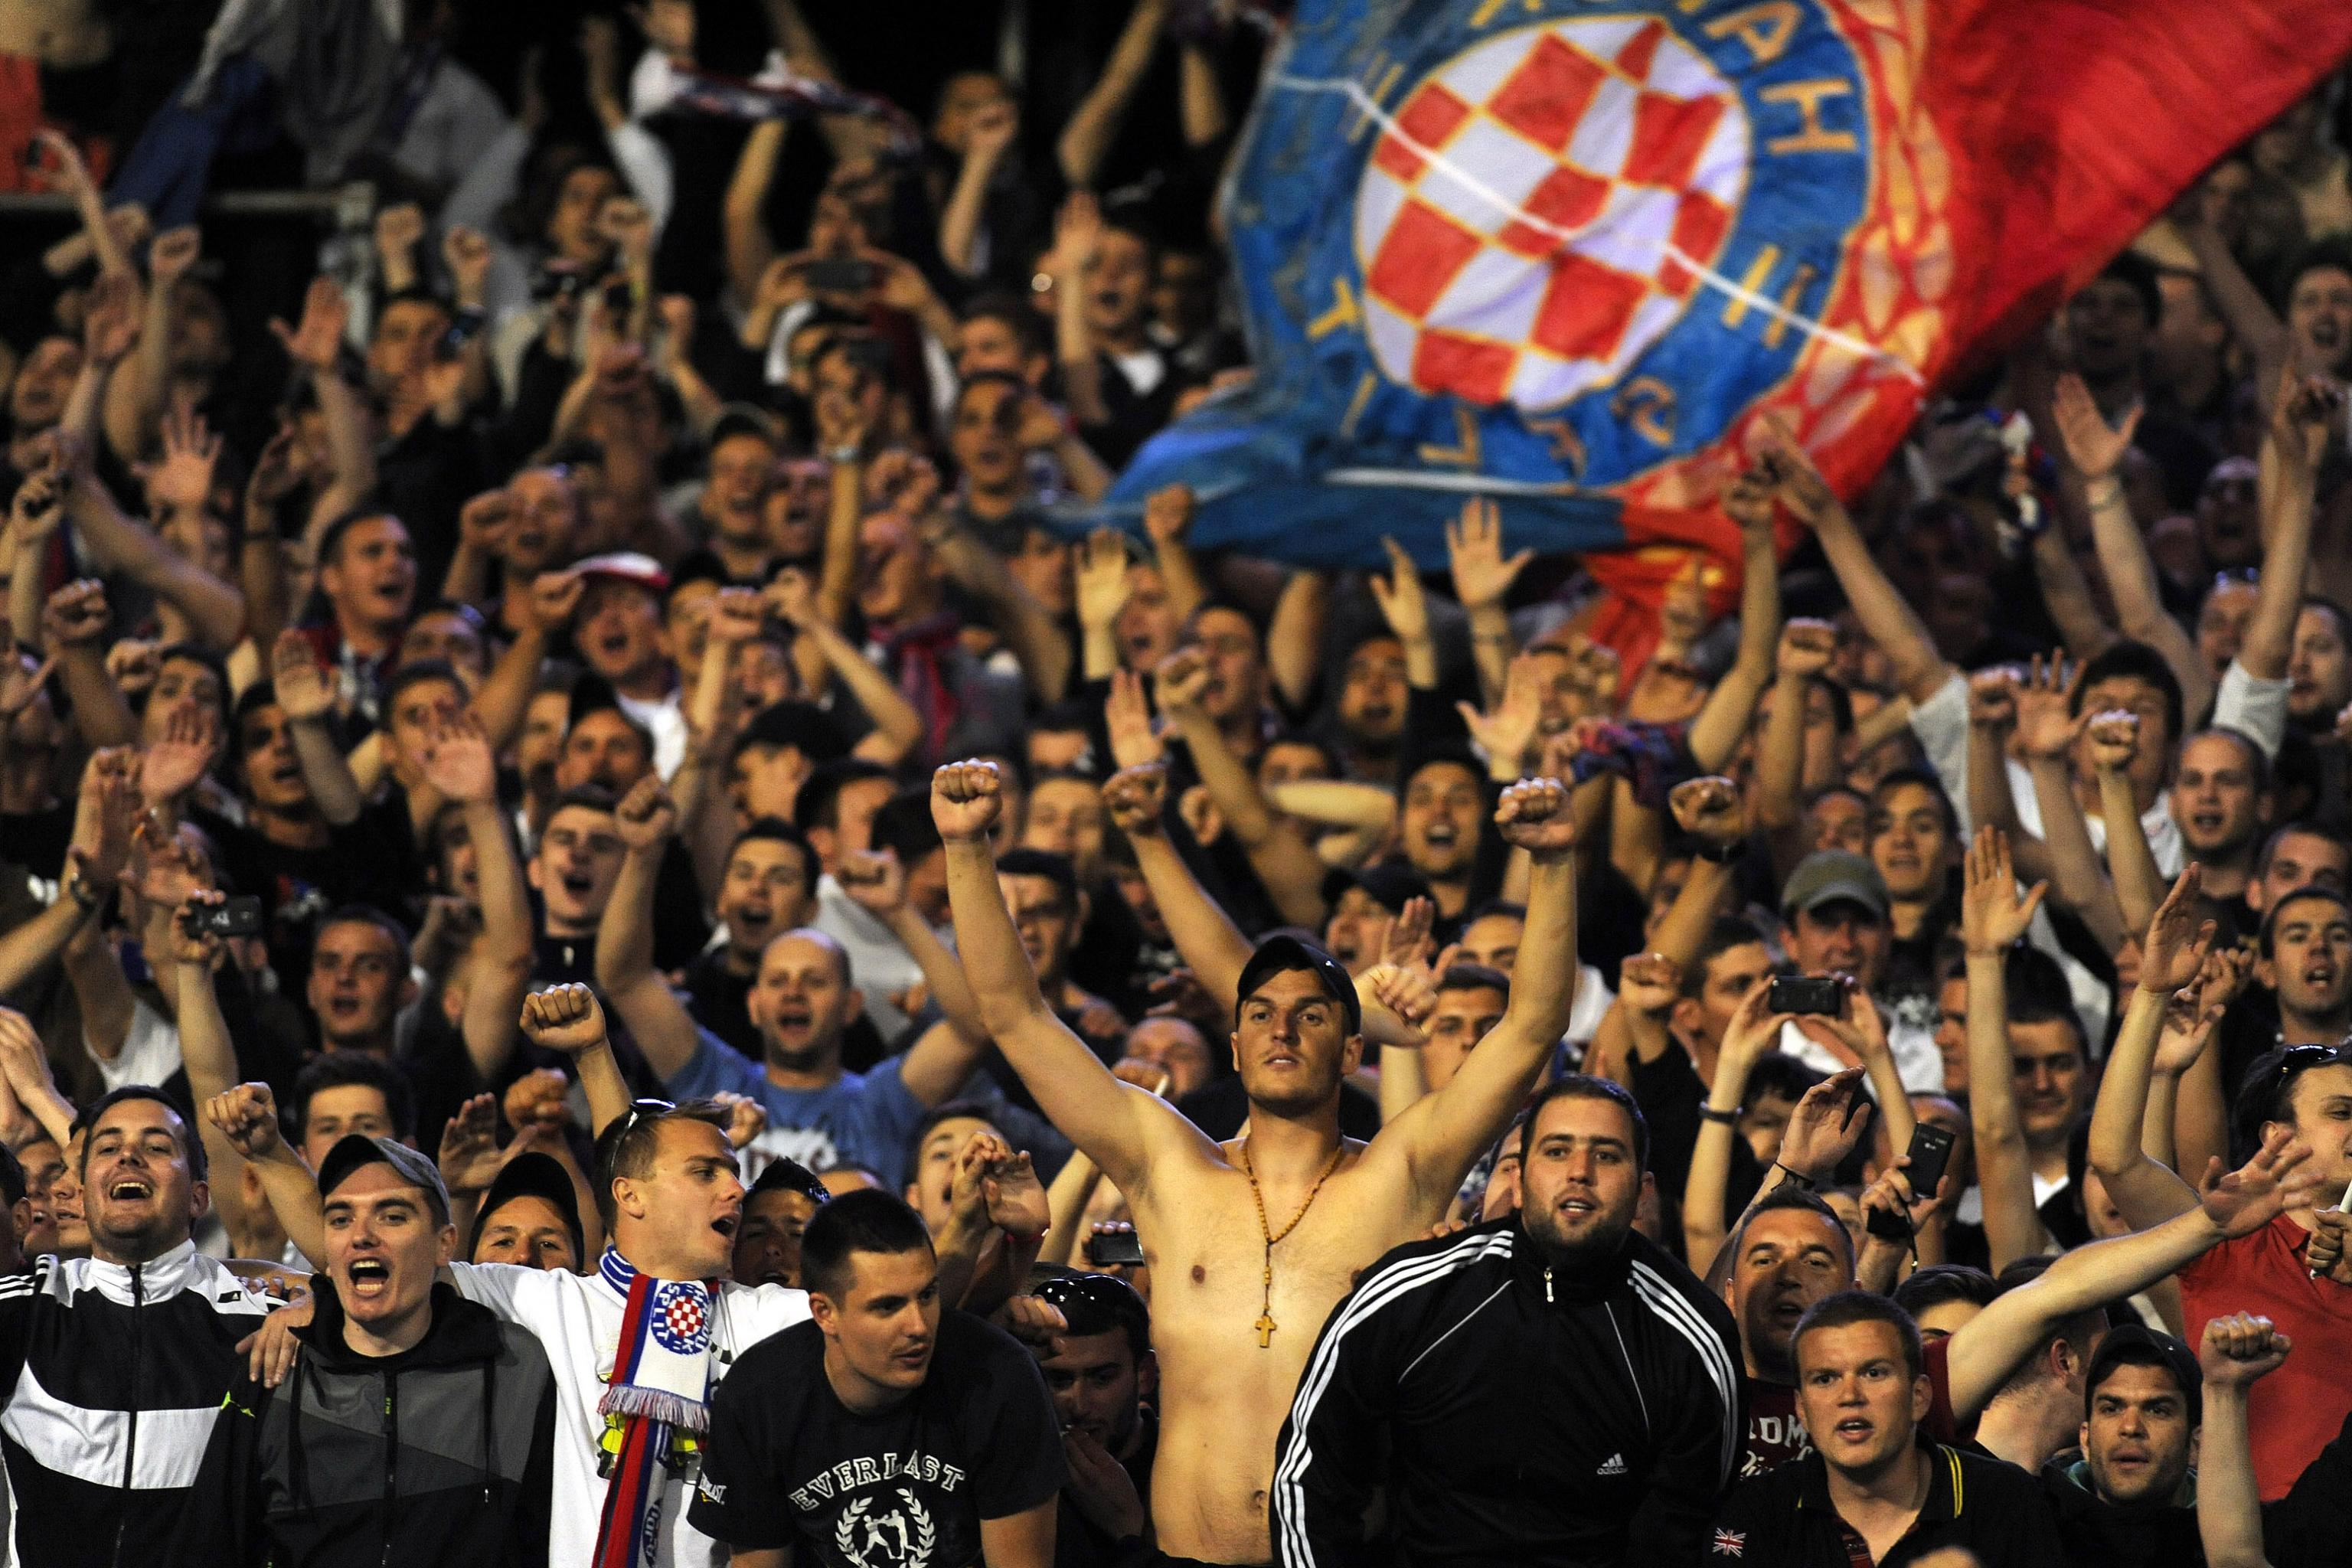 HNK Rijeka 3-1 HNK Hajduk Split :: Highlights :: Videos 